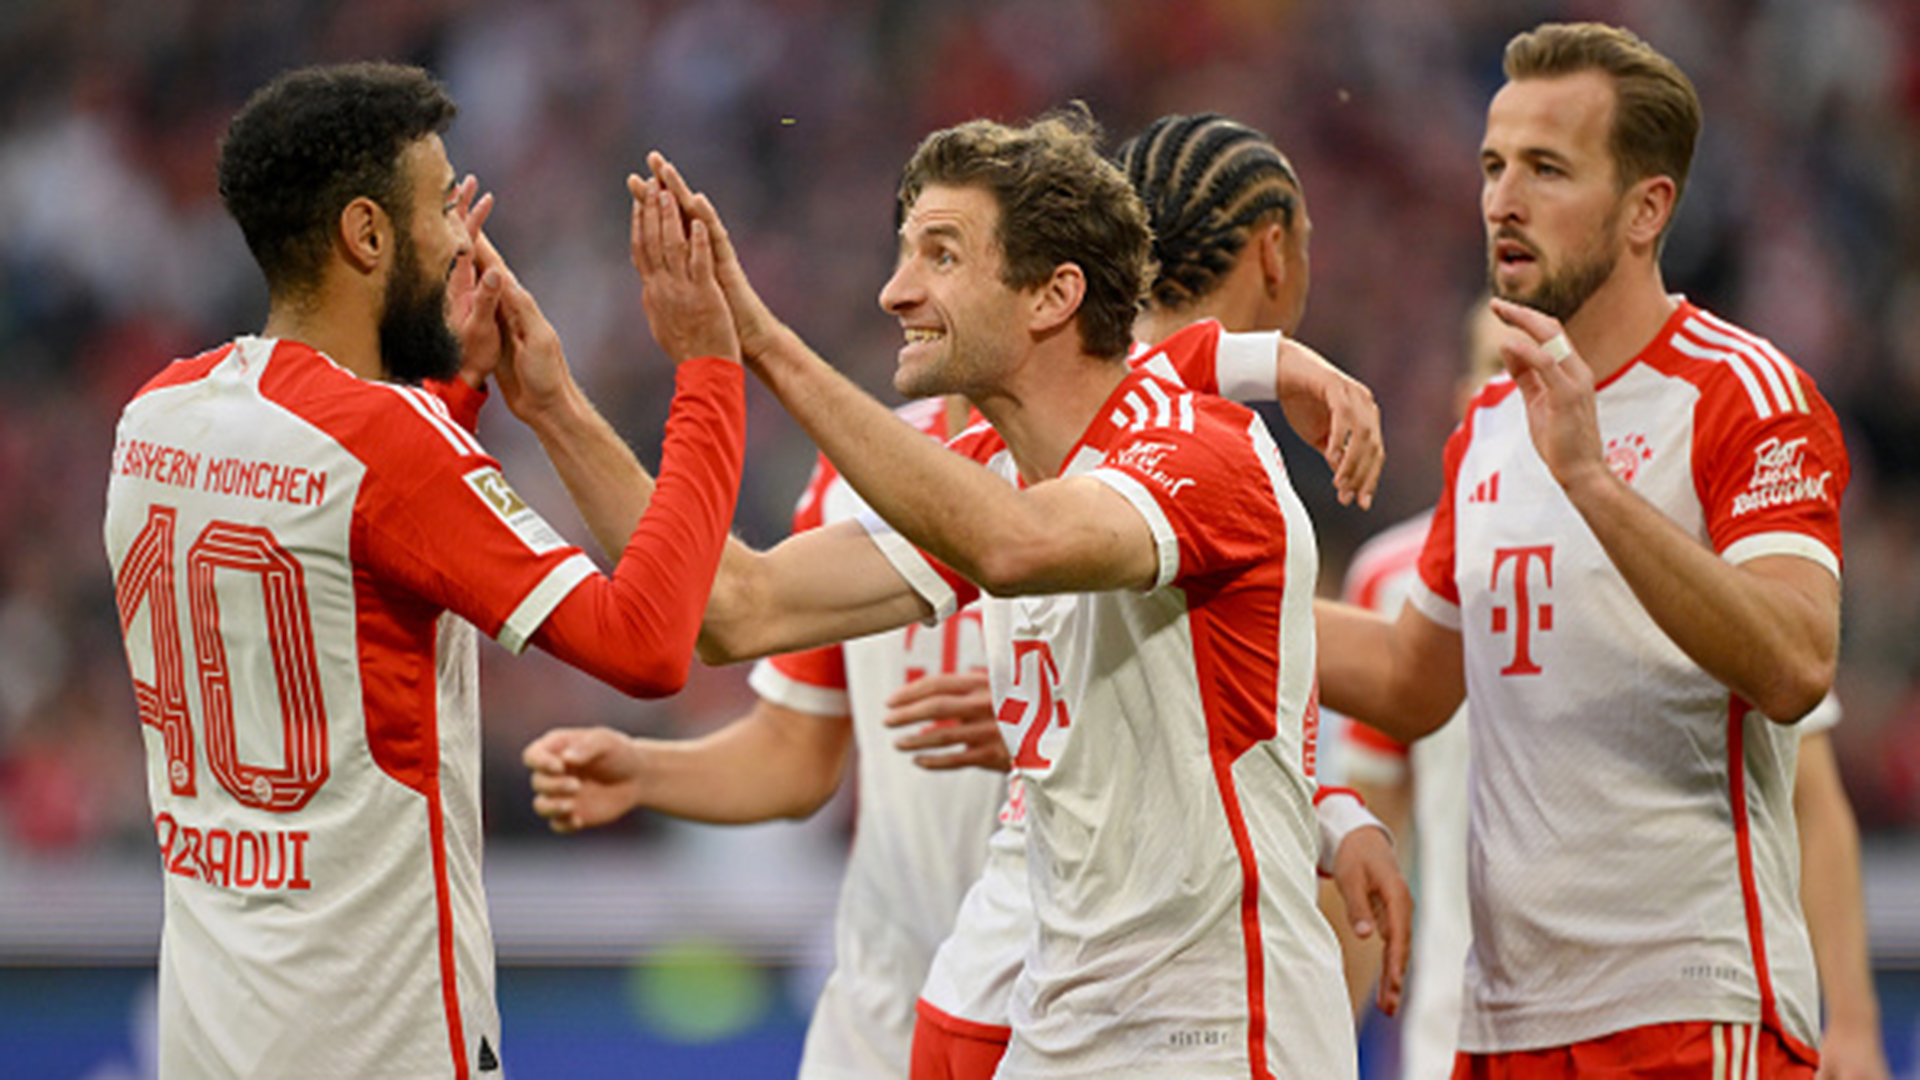 "Sensational Upset: Bayern Munich Stunned by Third-Division Underdogs in German Cup!"